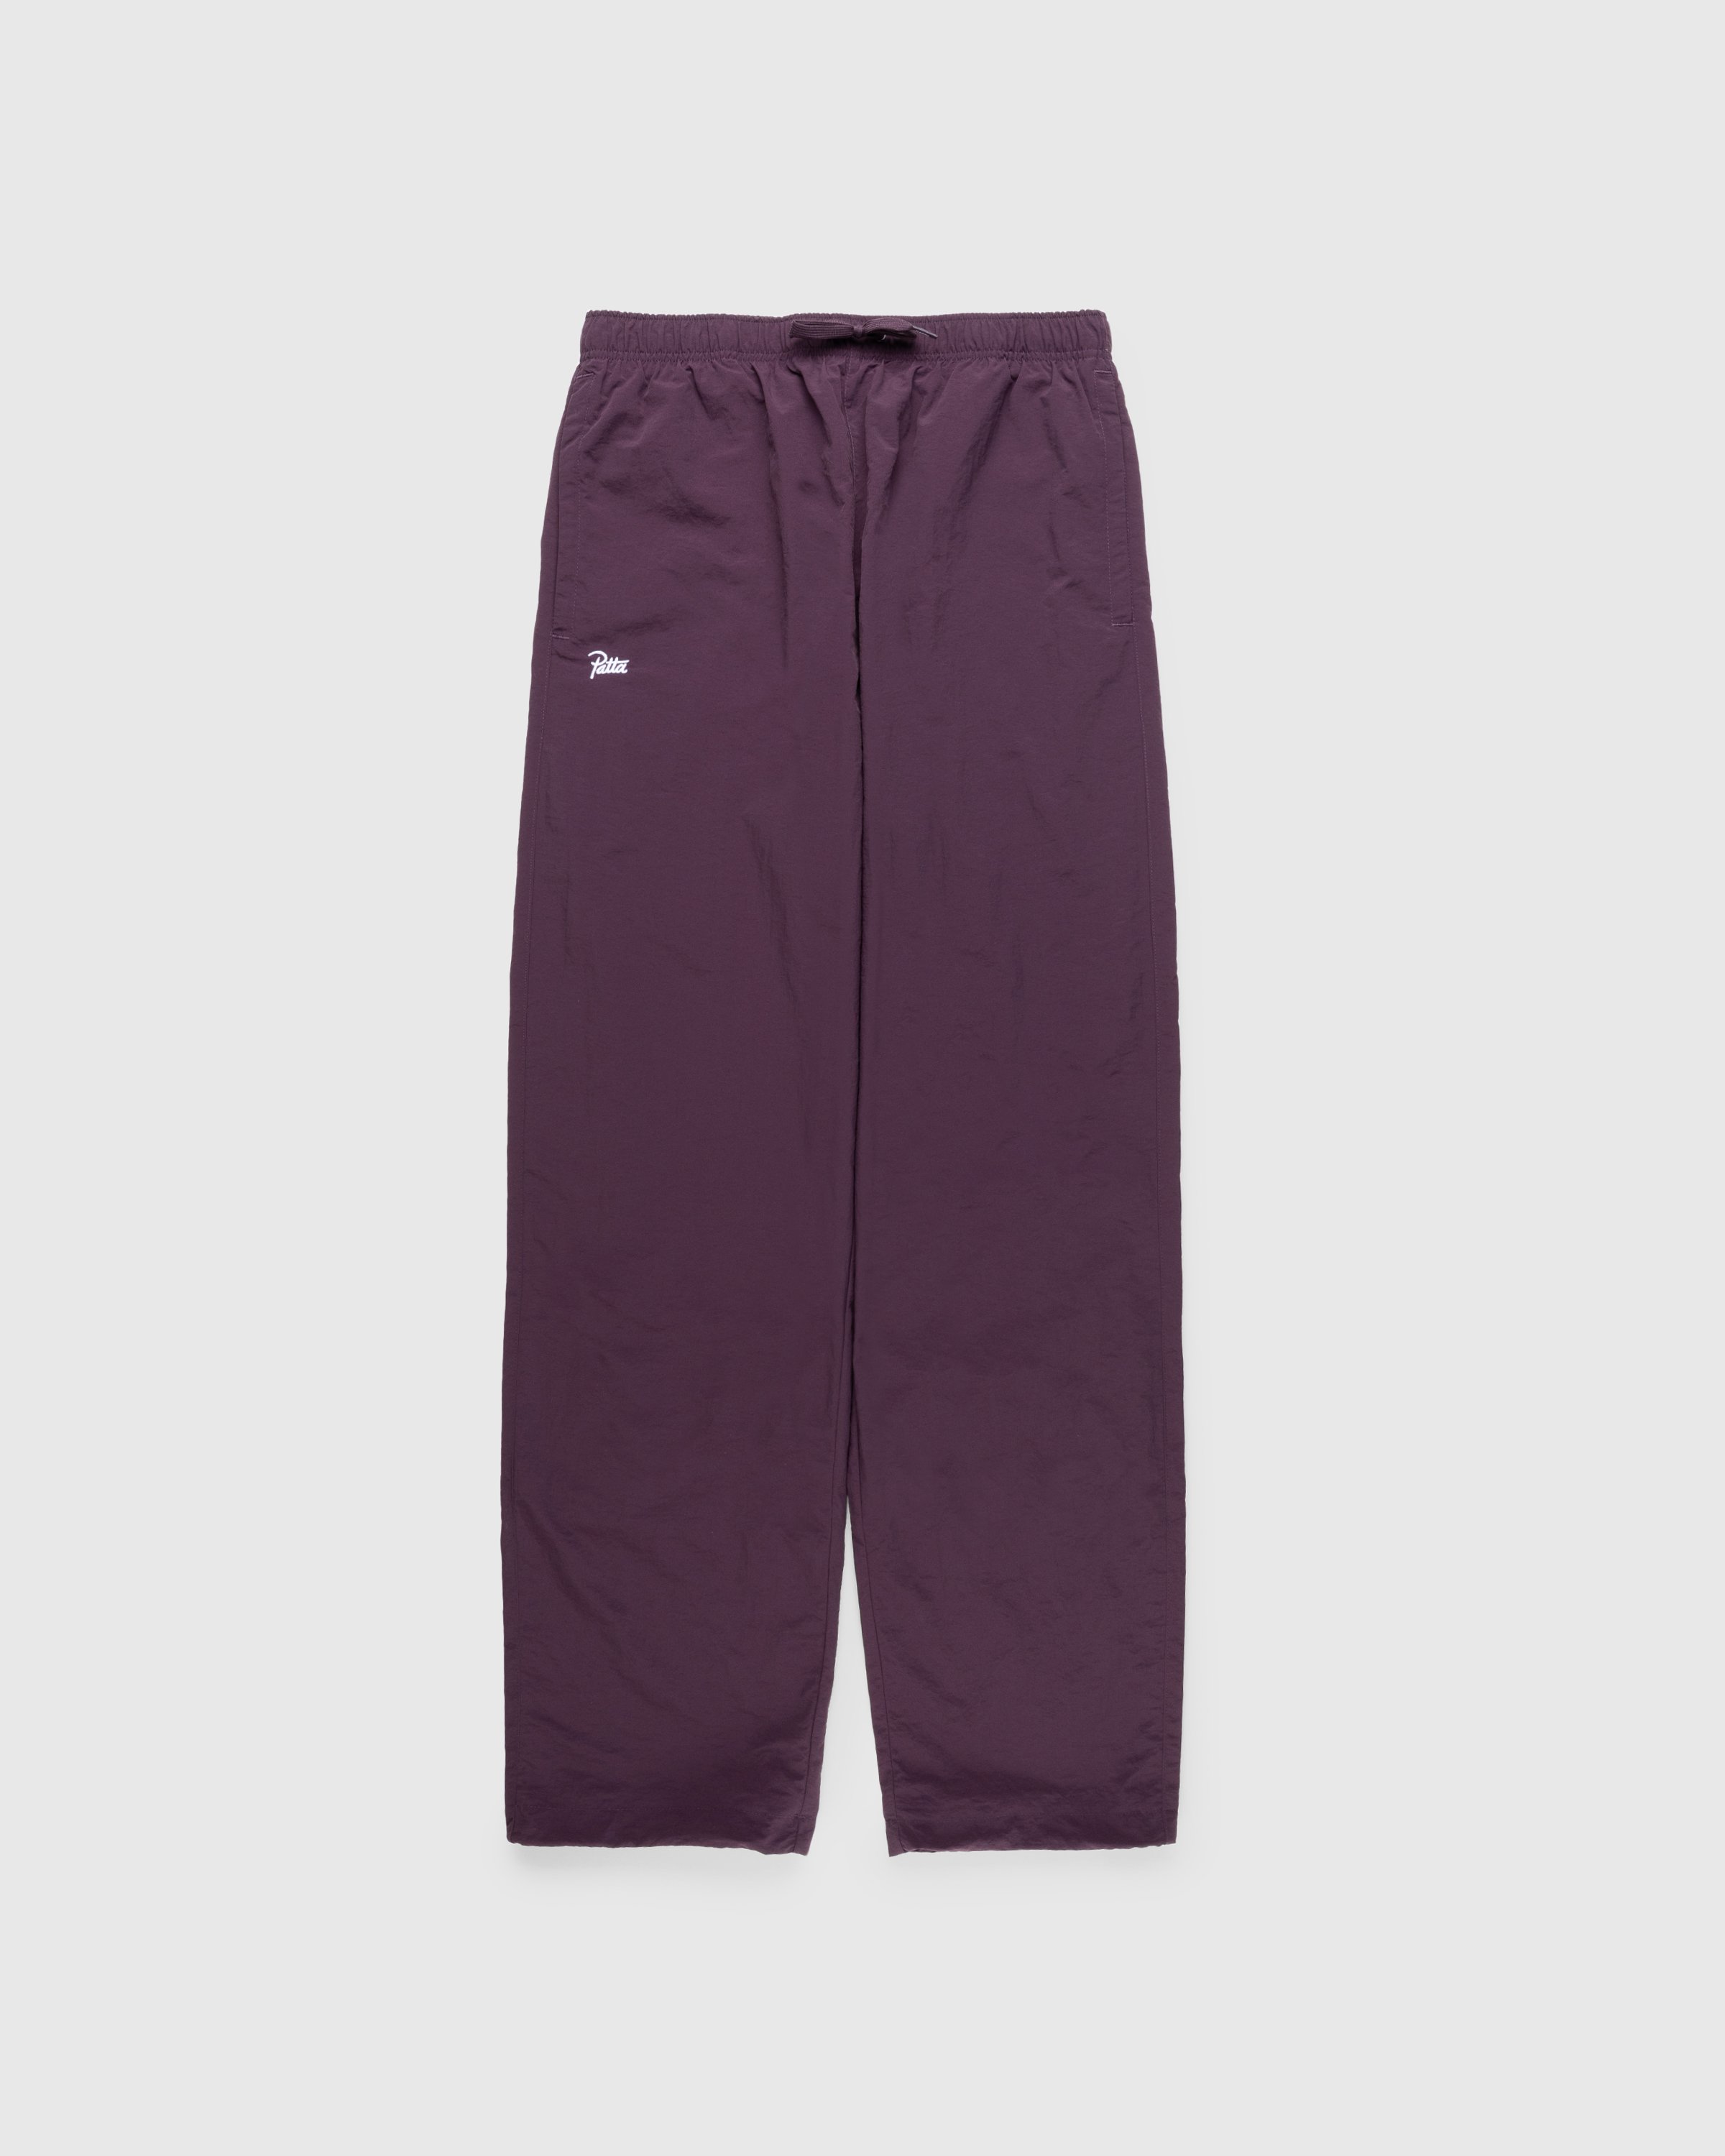 Patta - Basic Nylon M2 Track Pants Plum Perfect - Clothing - Purple - Image 1